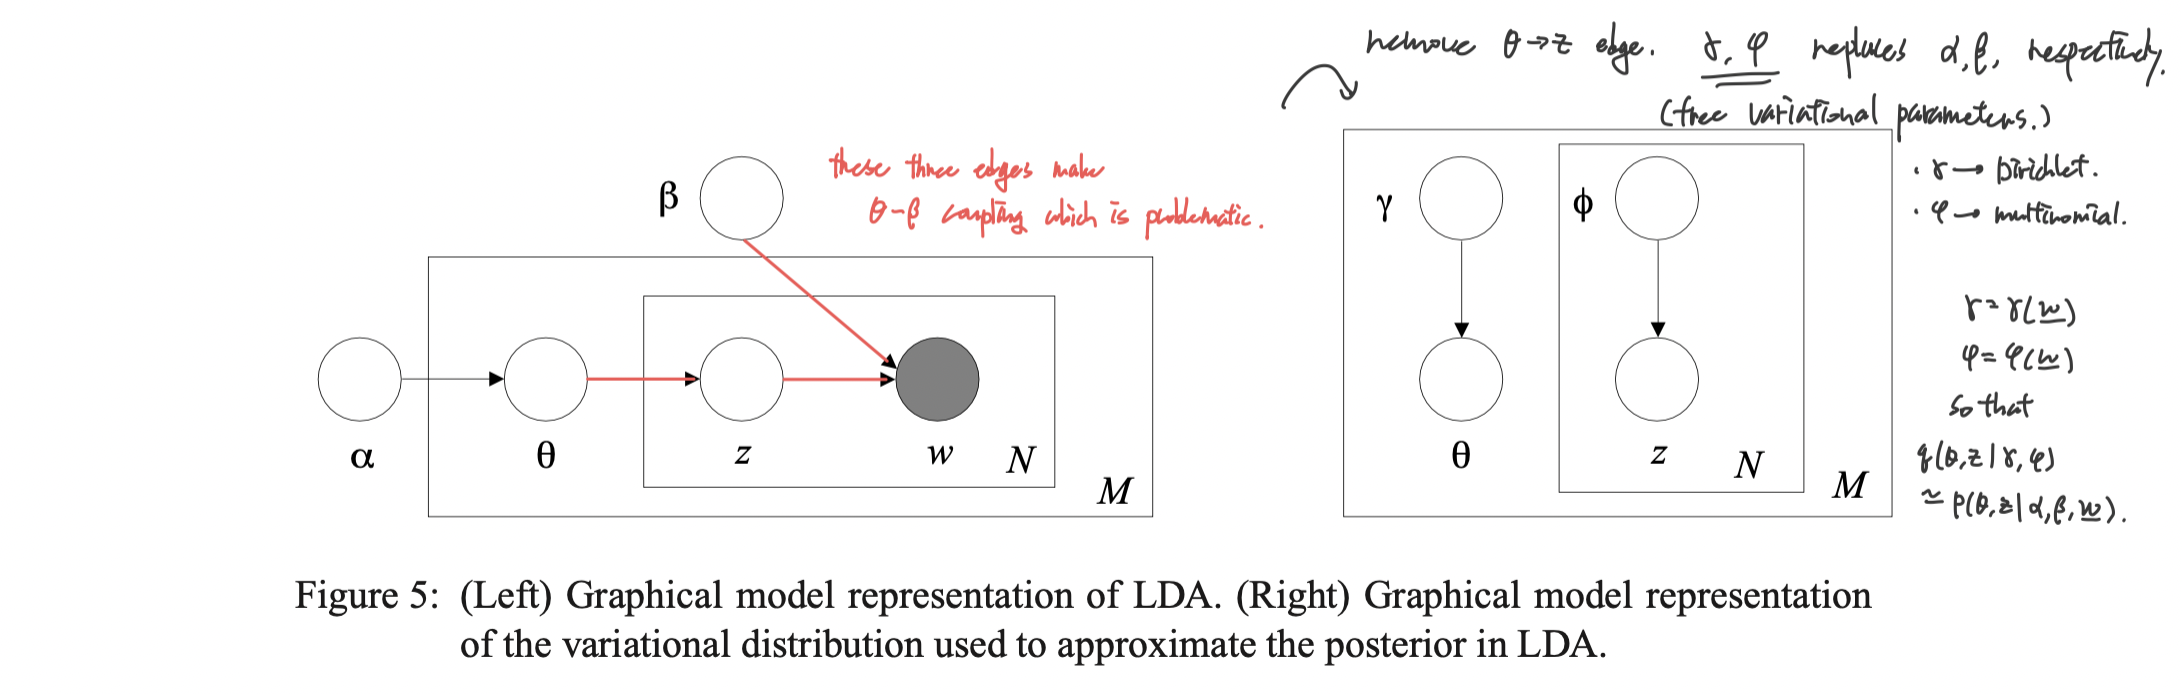 lda-variational-inference